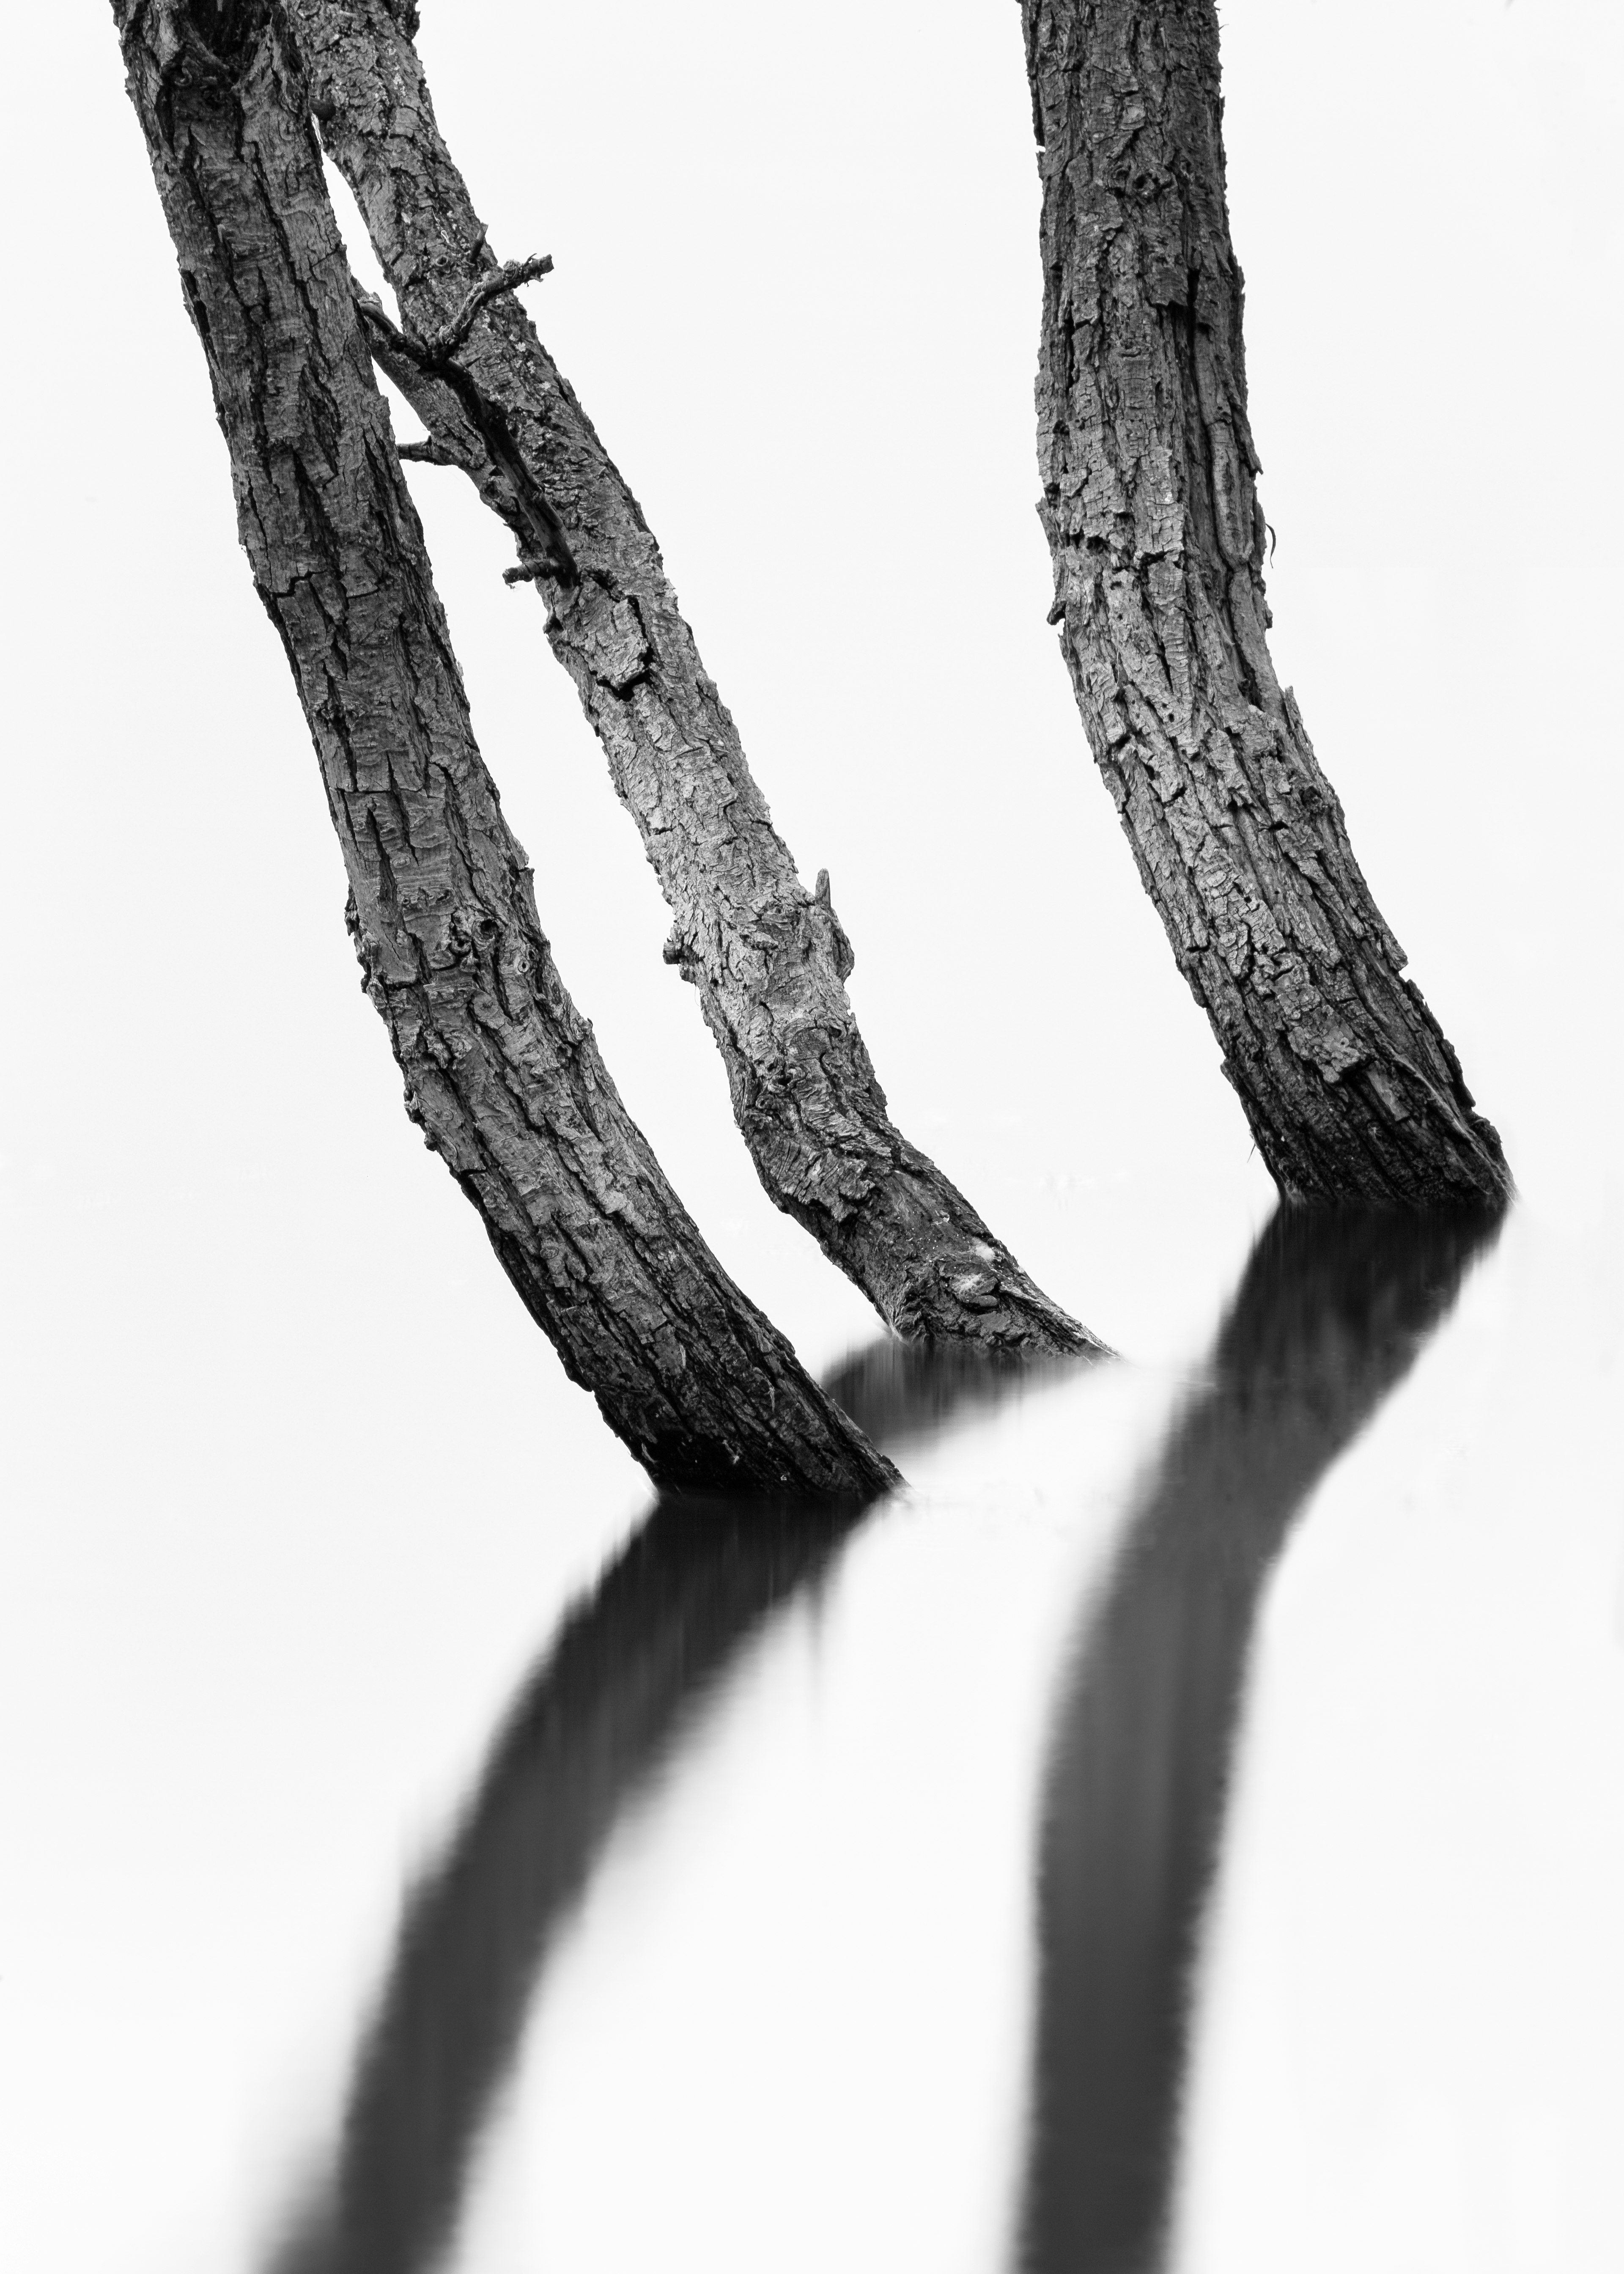 grayscale photo of three tree stumps